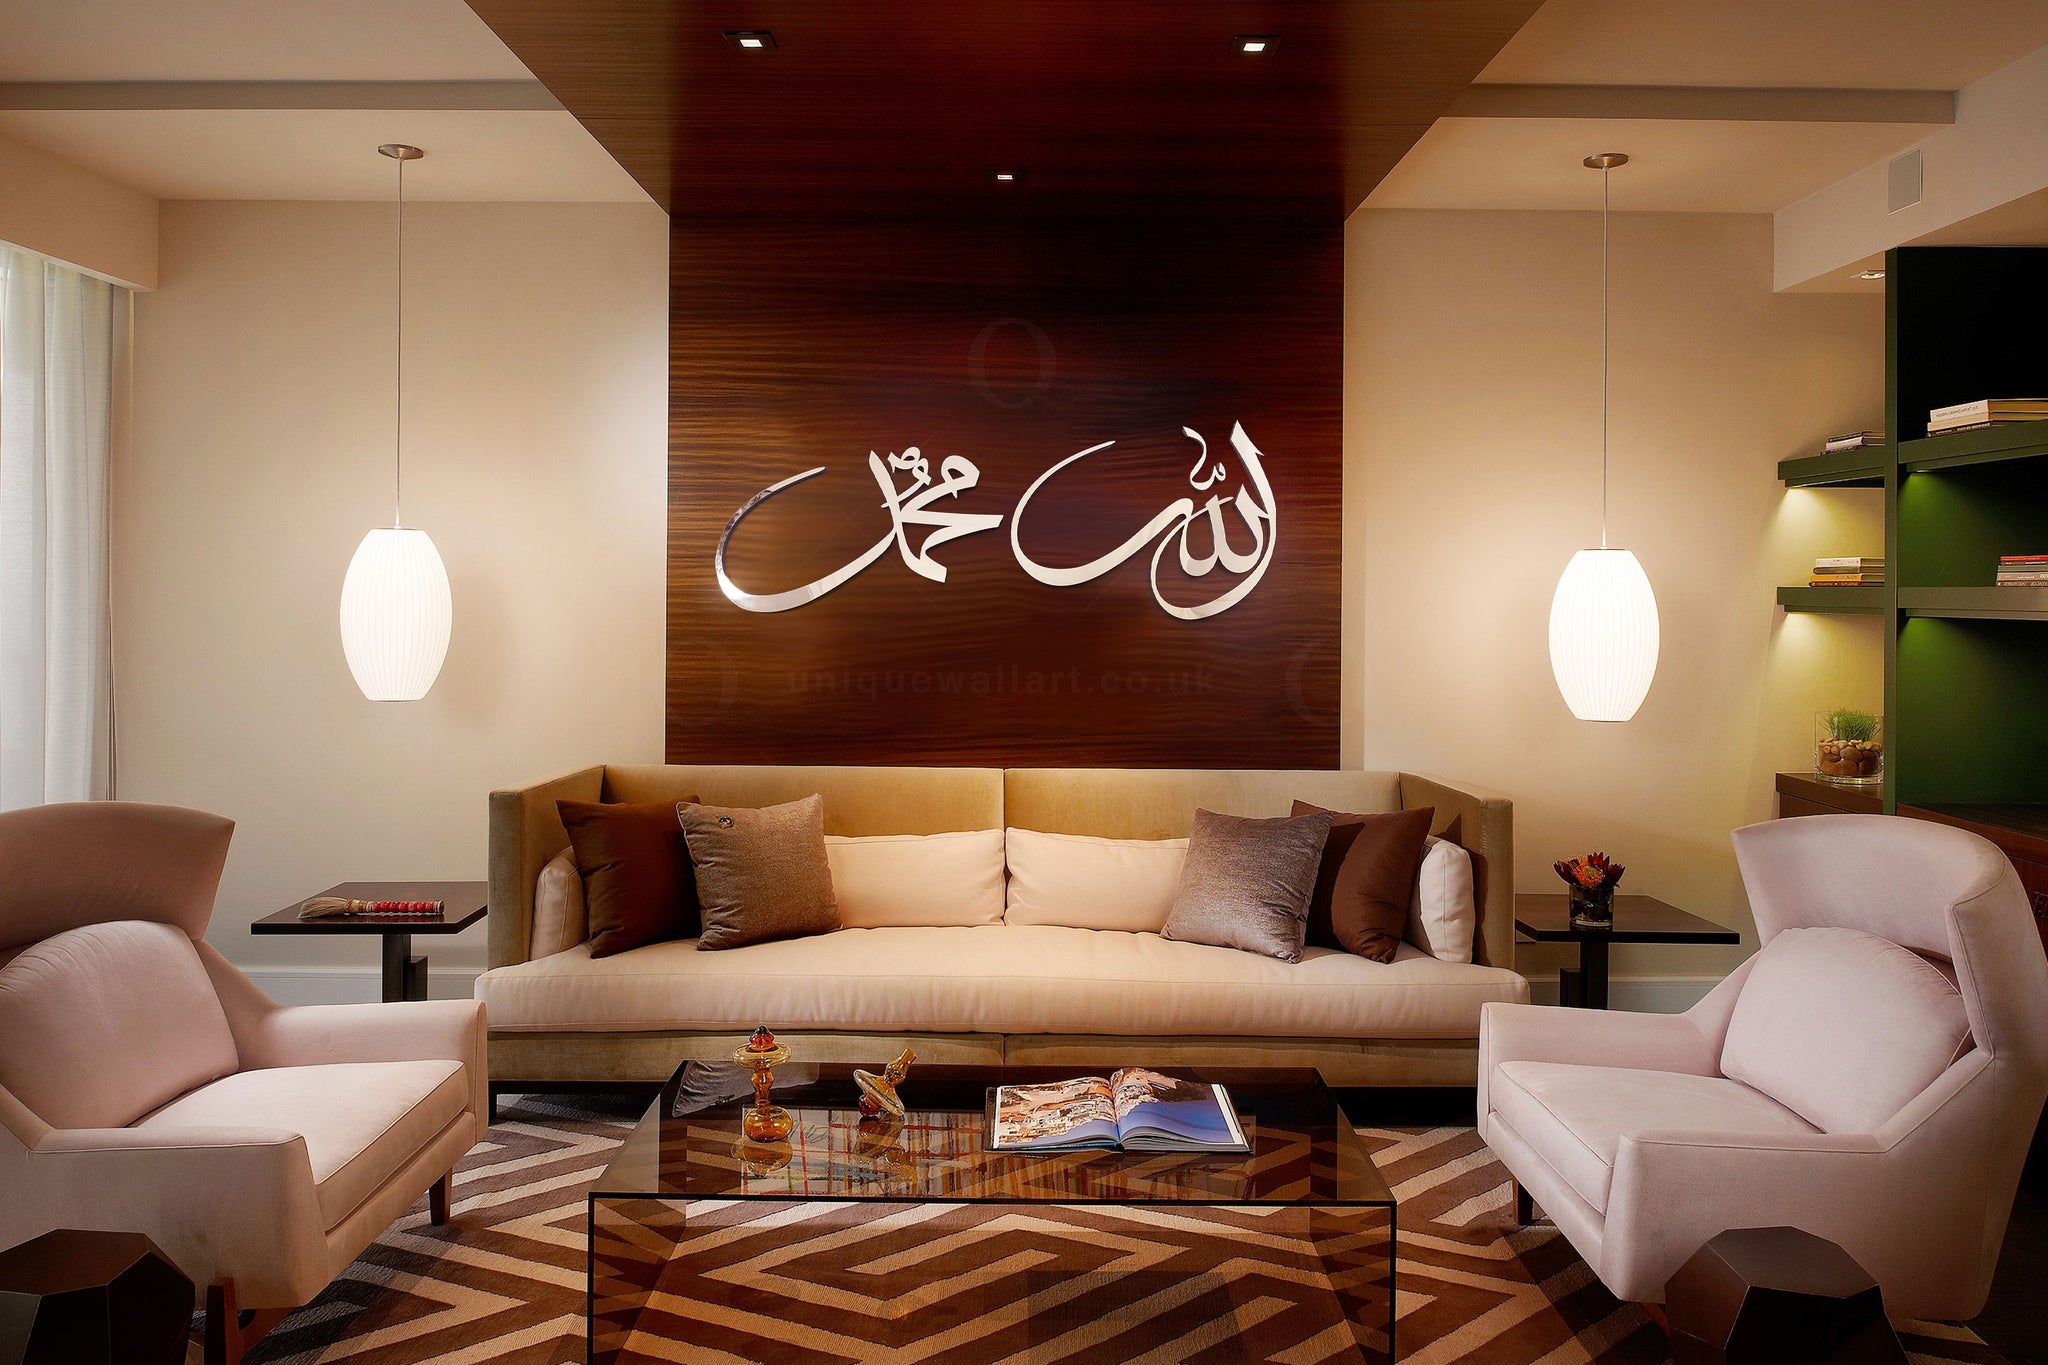 Allah and Mohammad (PBUH) 3D Wall Art